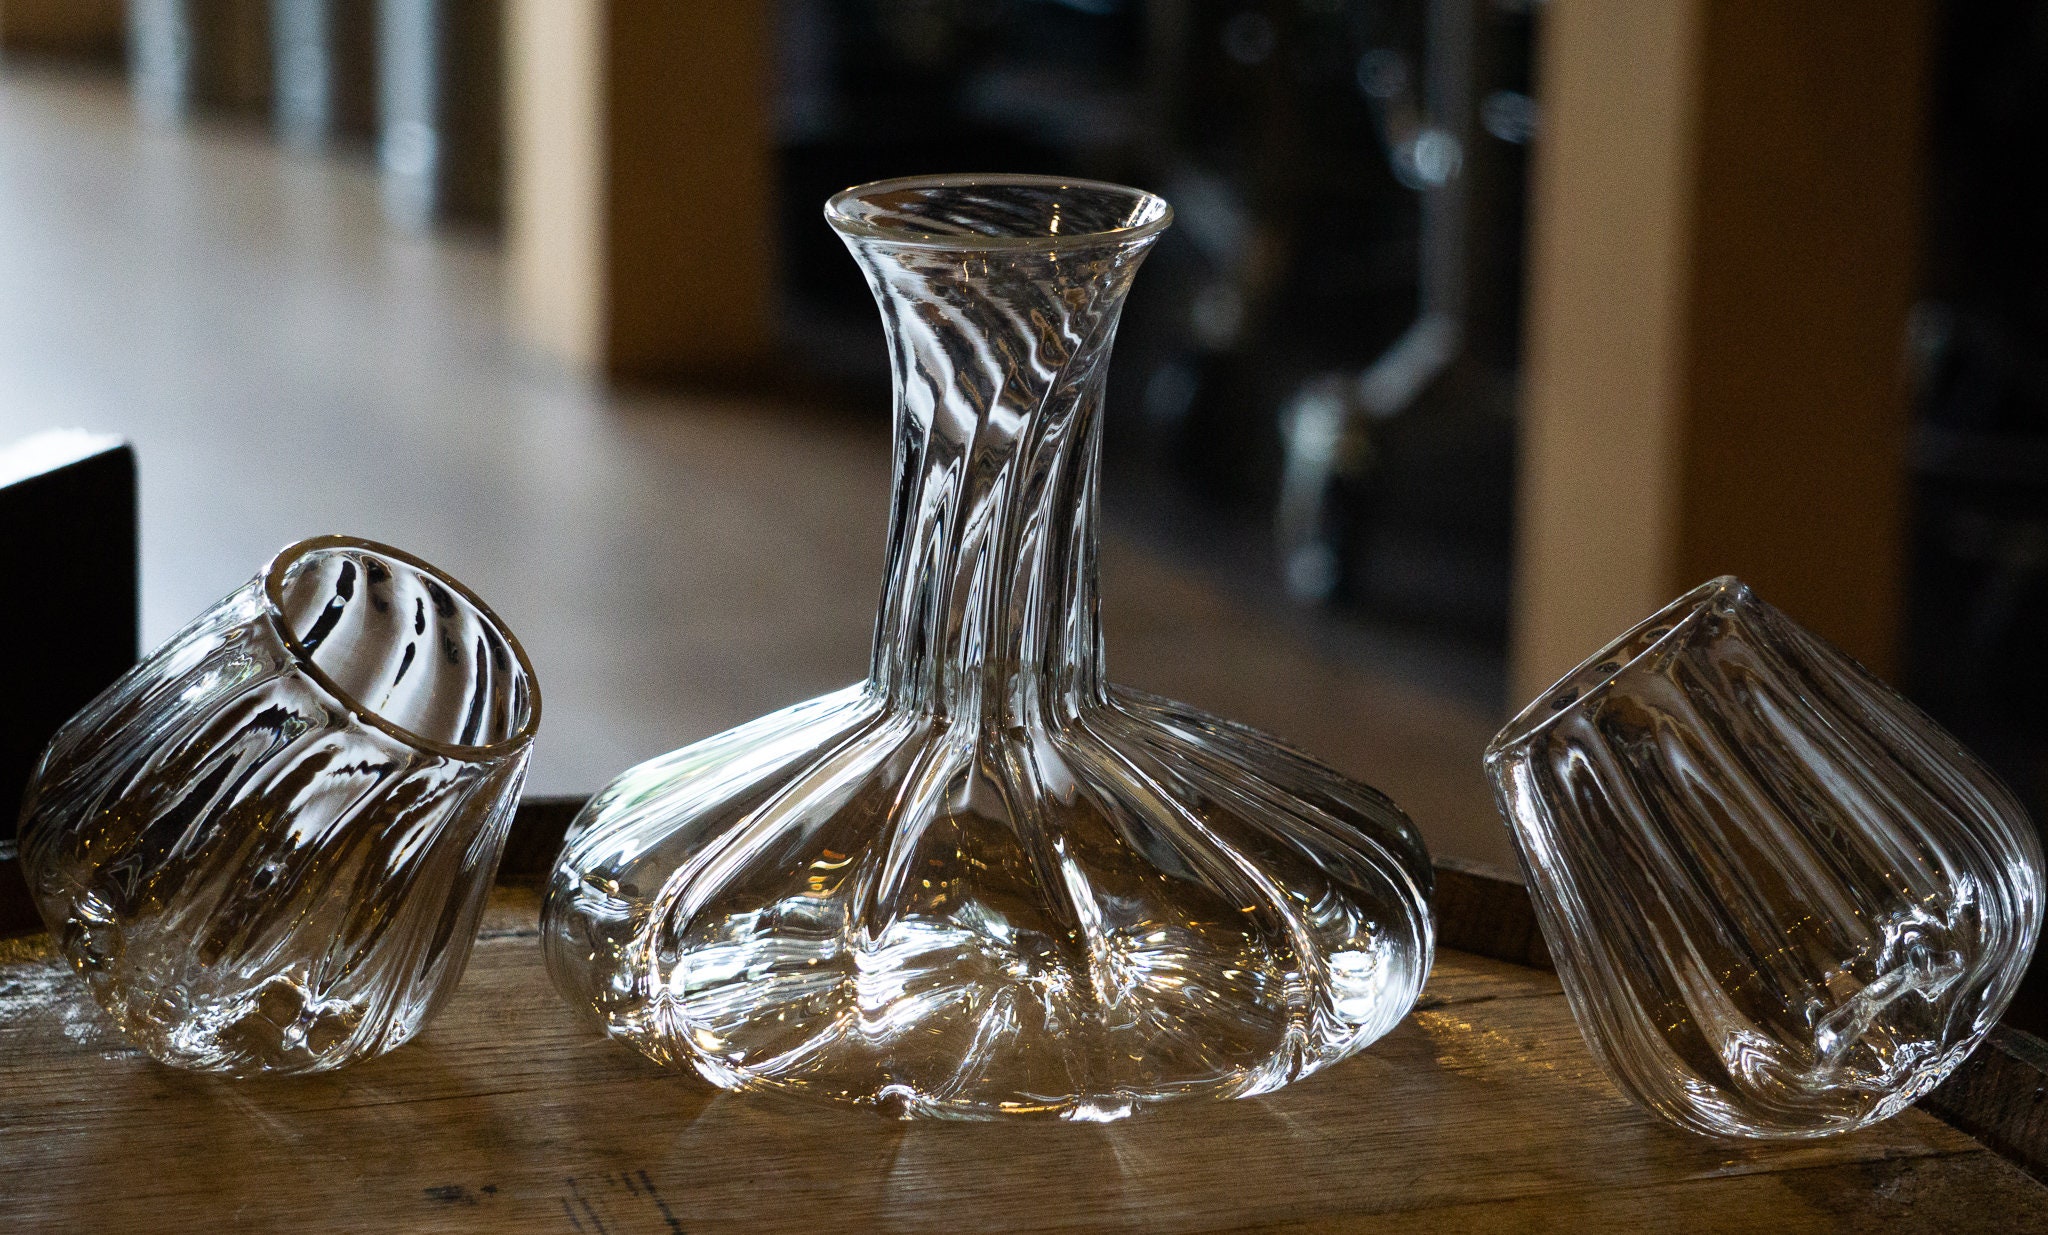 1750ML Wine Decanter Glass Iceberg Whiskey Decanter Glass Carafe